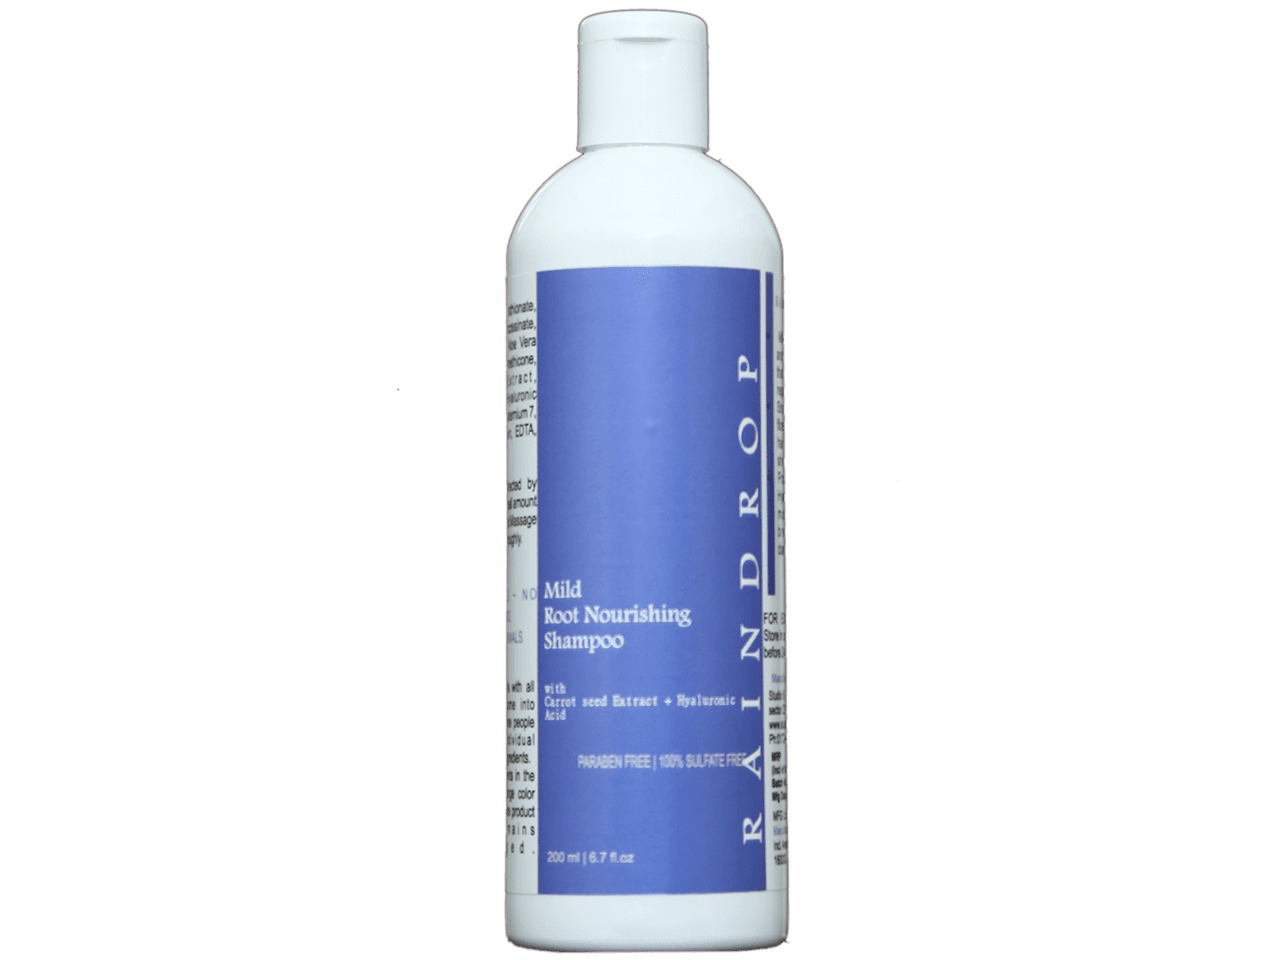 RAINDROP - Mild Nourishing Shampoo For Hair